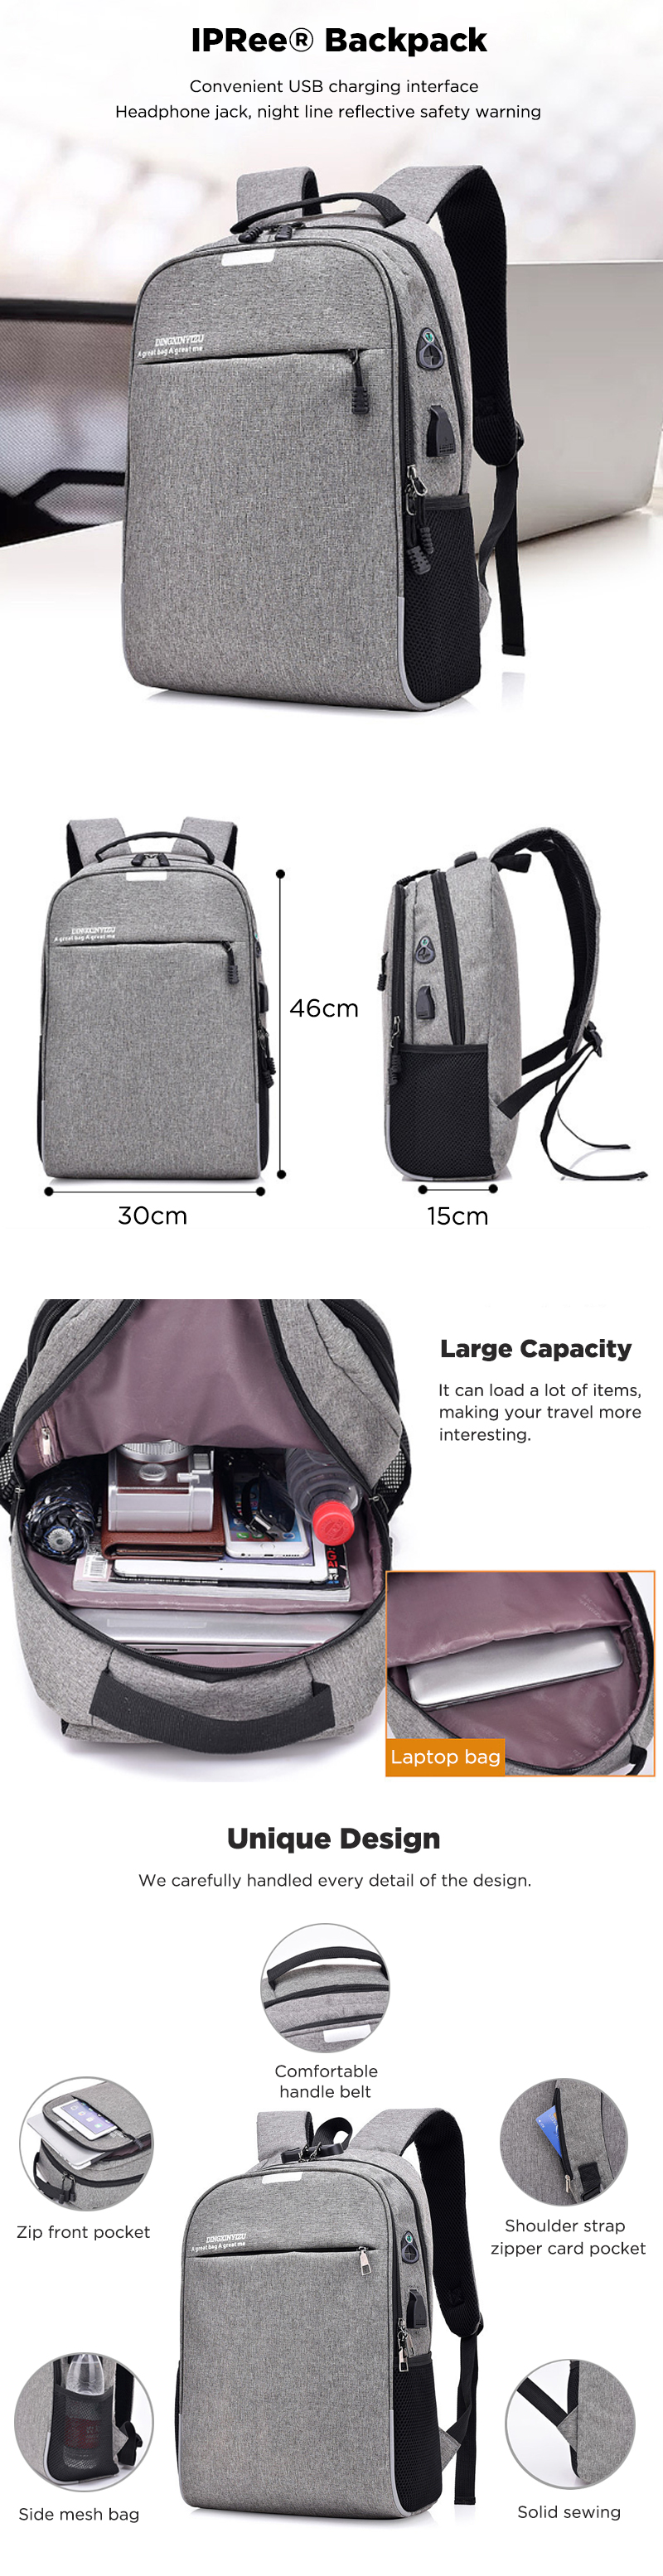 IPReereg-18L-Backpack-16inch-Laptop-Bag-USB-Charging-Headphone-Jack-Shoulder-Bag-Anti-theft-Luminous-1587935-1